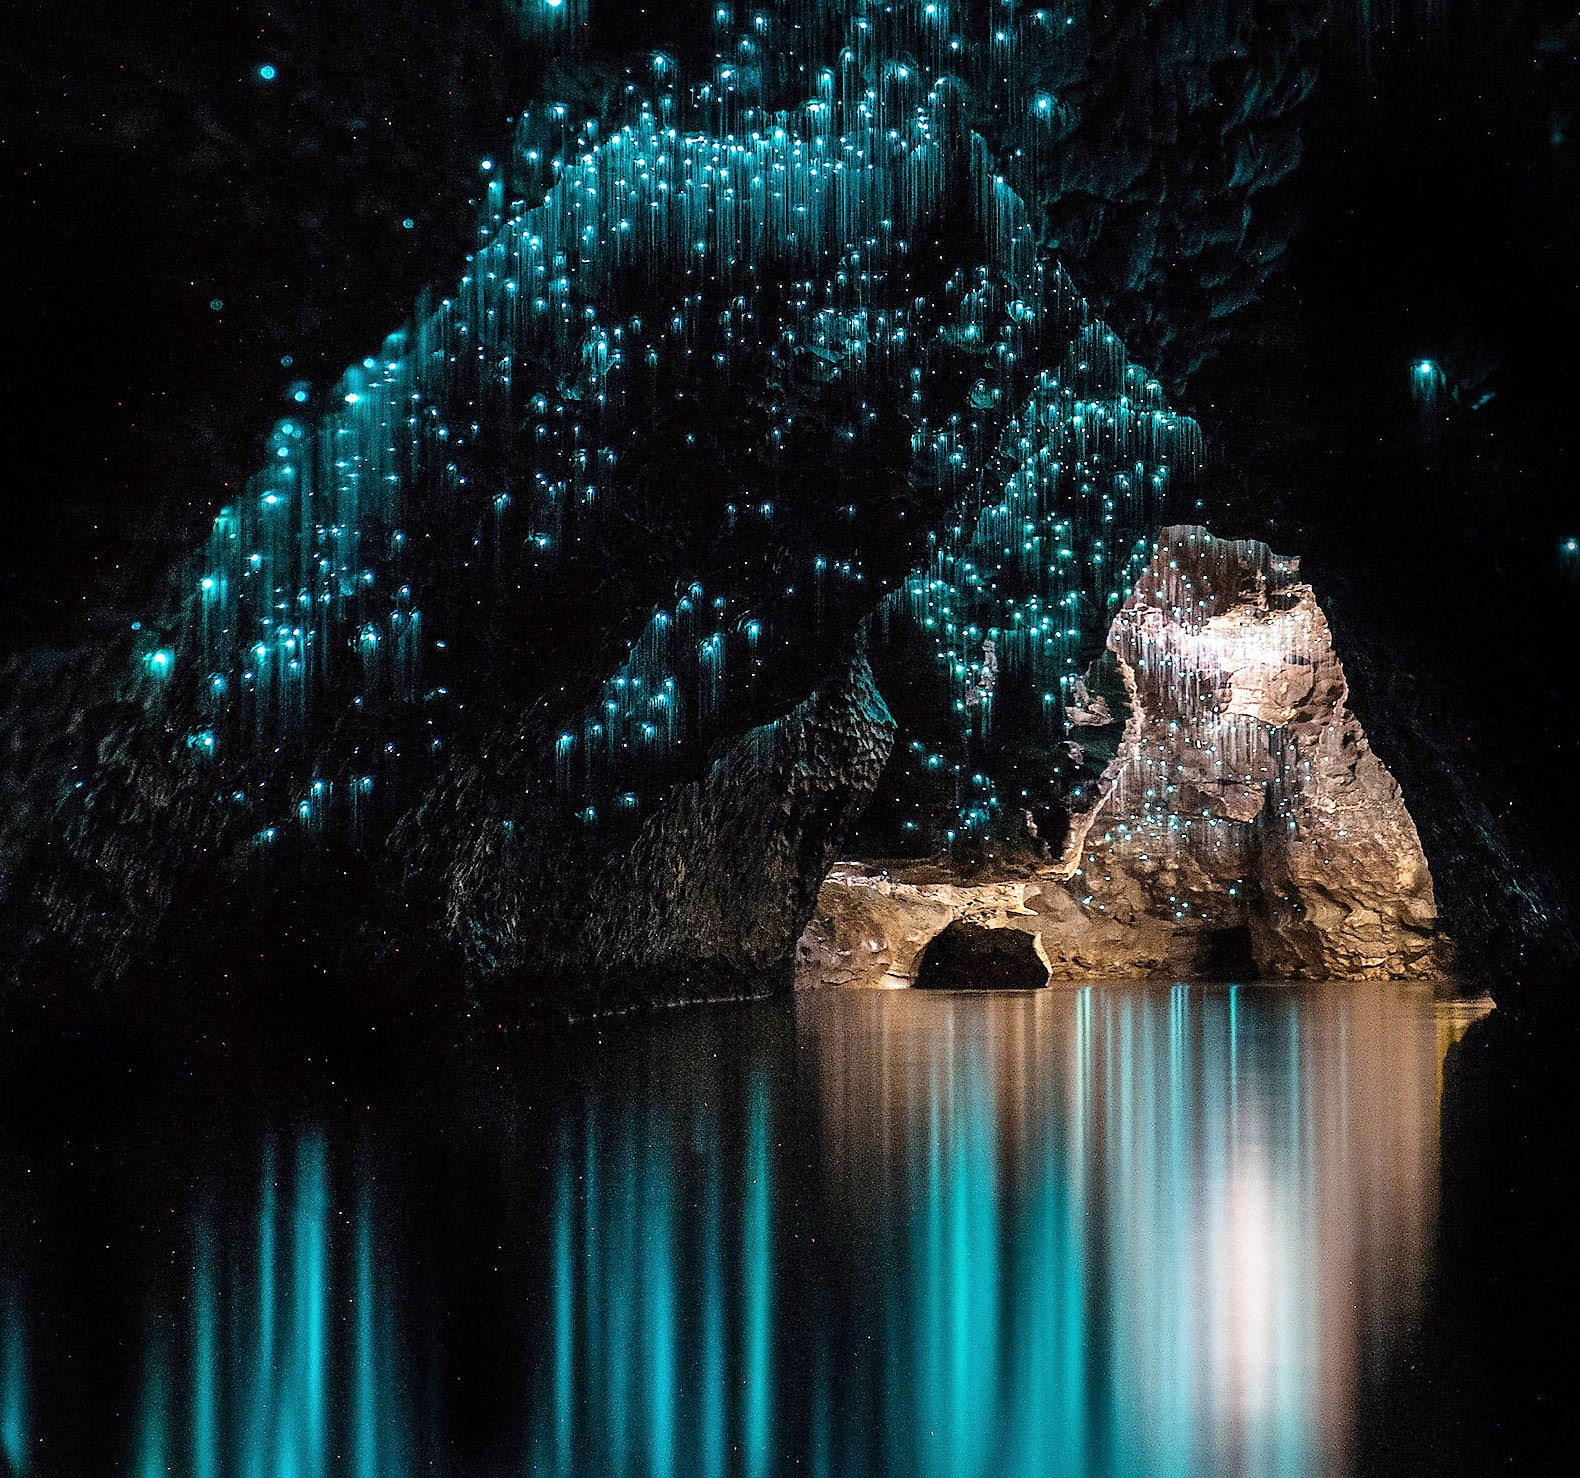 5 Five 5 Waitomo Glowworm Caves New Zealand